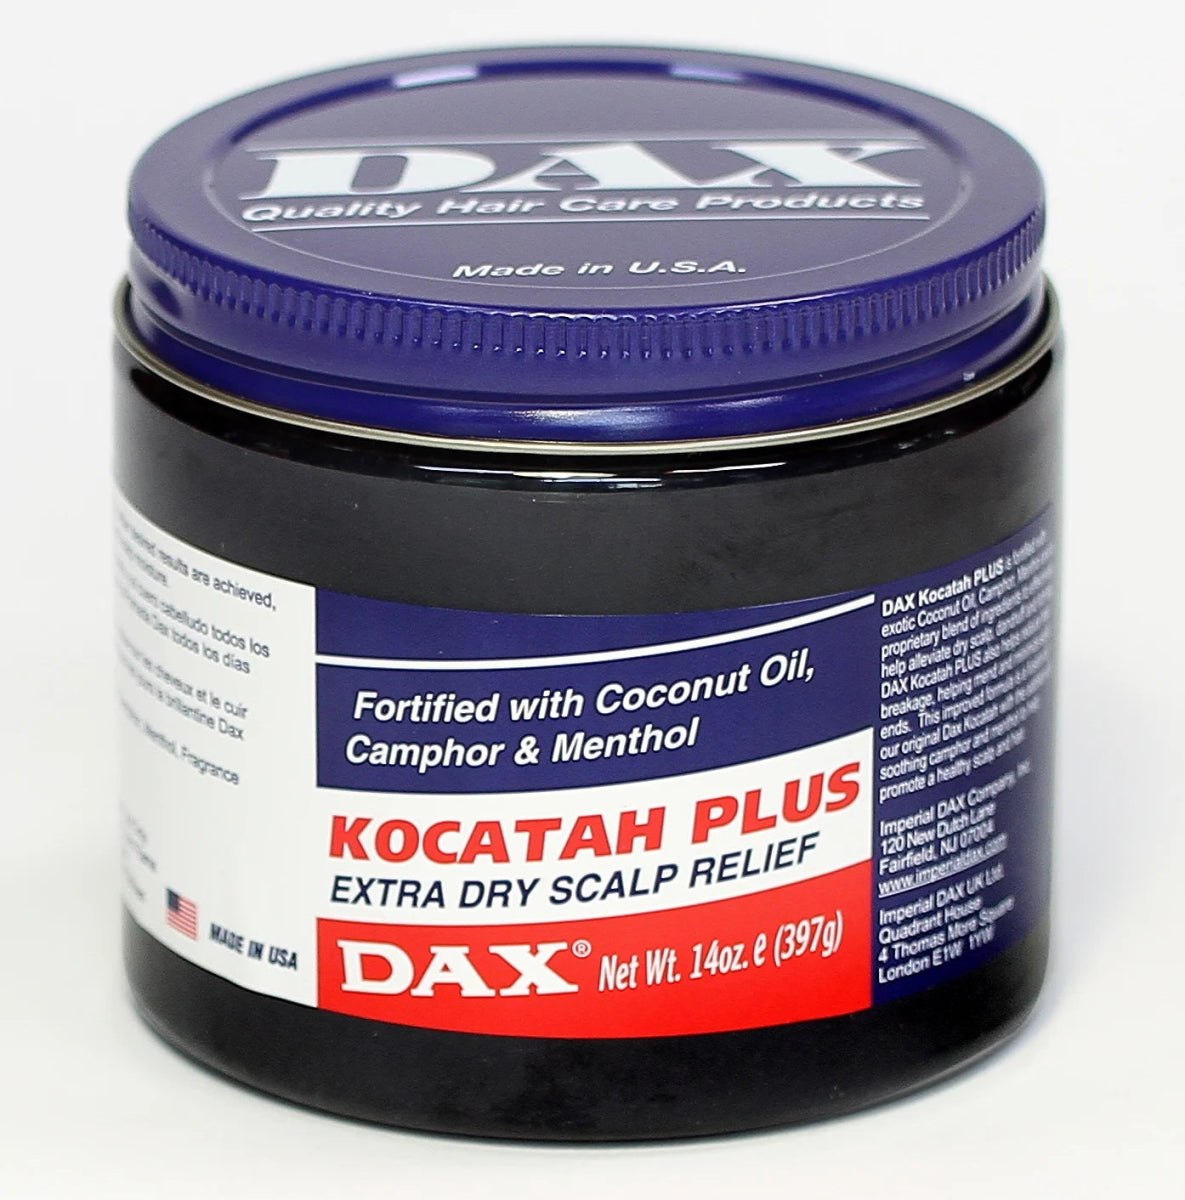 DAX Kocatah Plus - Southwestsix Cosmetics DAX Kocatah Plus Hair Moisturiser DAX Southwestsix Cosmetics 3.5oz DAX Kocatah Plus